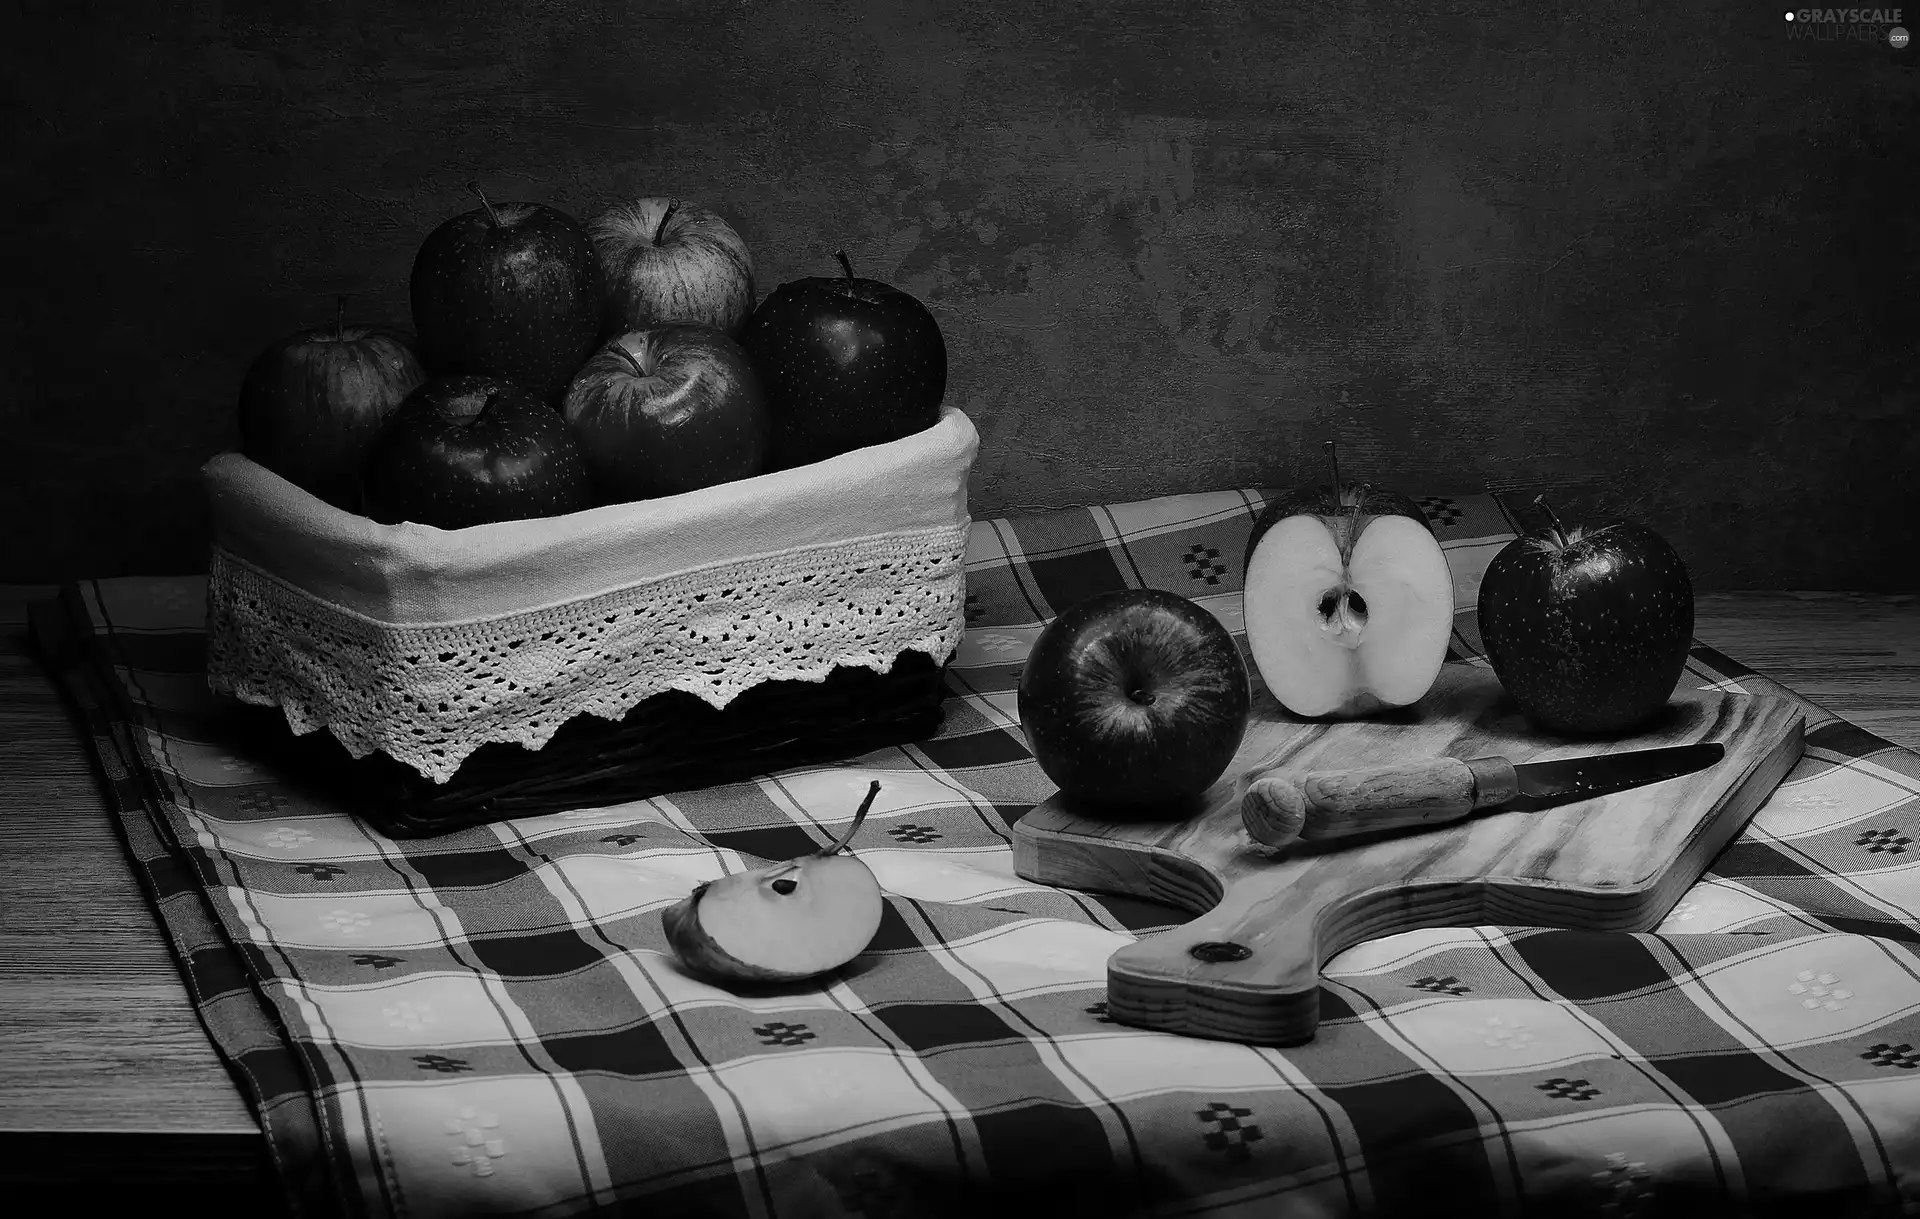 knife, tablecloth, basket, board, apples